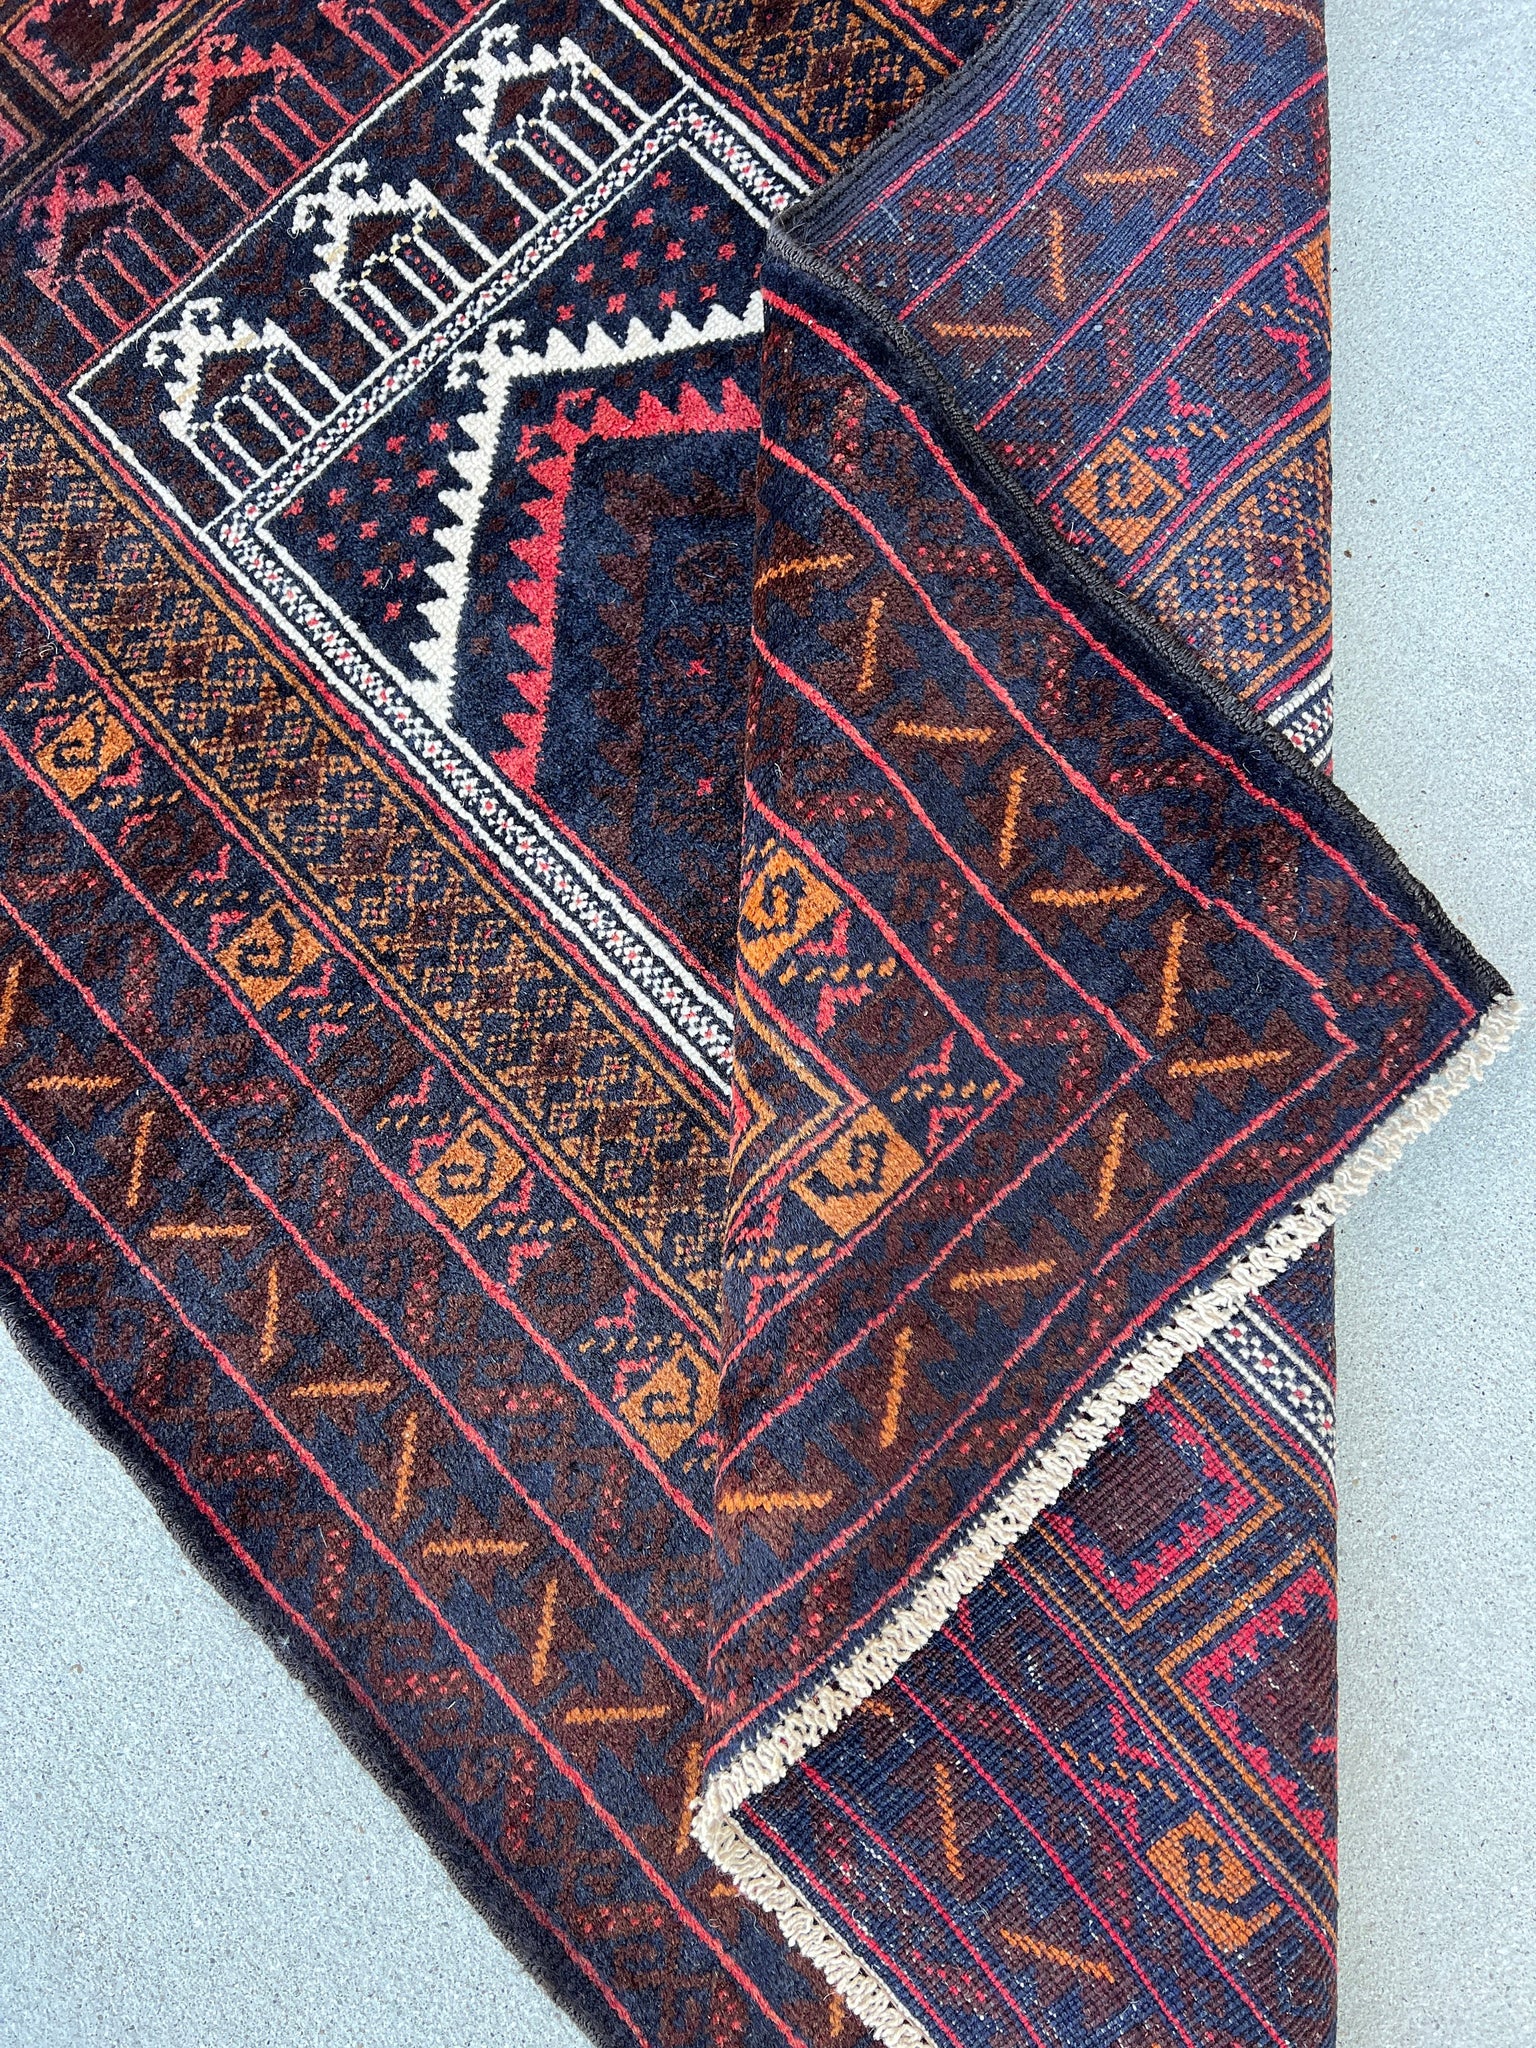 3x5 (100x180) Handmade Vintage Baluch Afghan Rug | Chocolate Brown Orange Caramel Brick Red Ivory Black Hand Knotted Prayer Rug Persian Wool